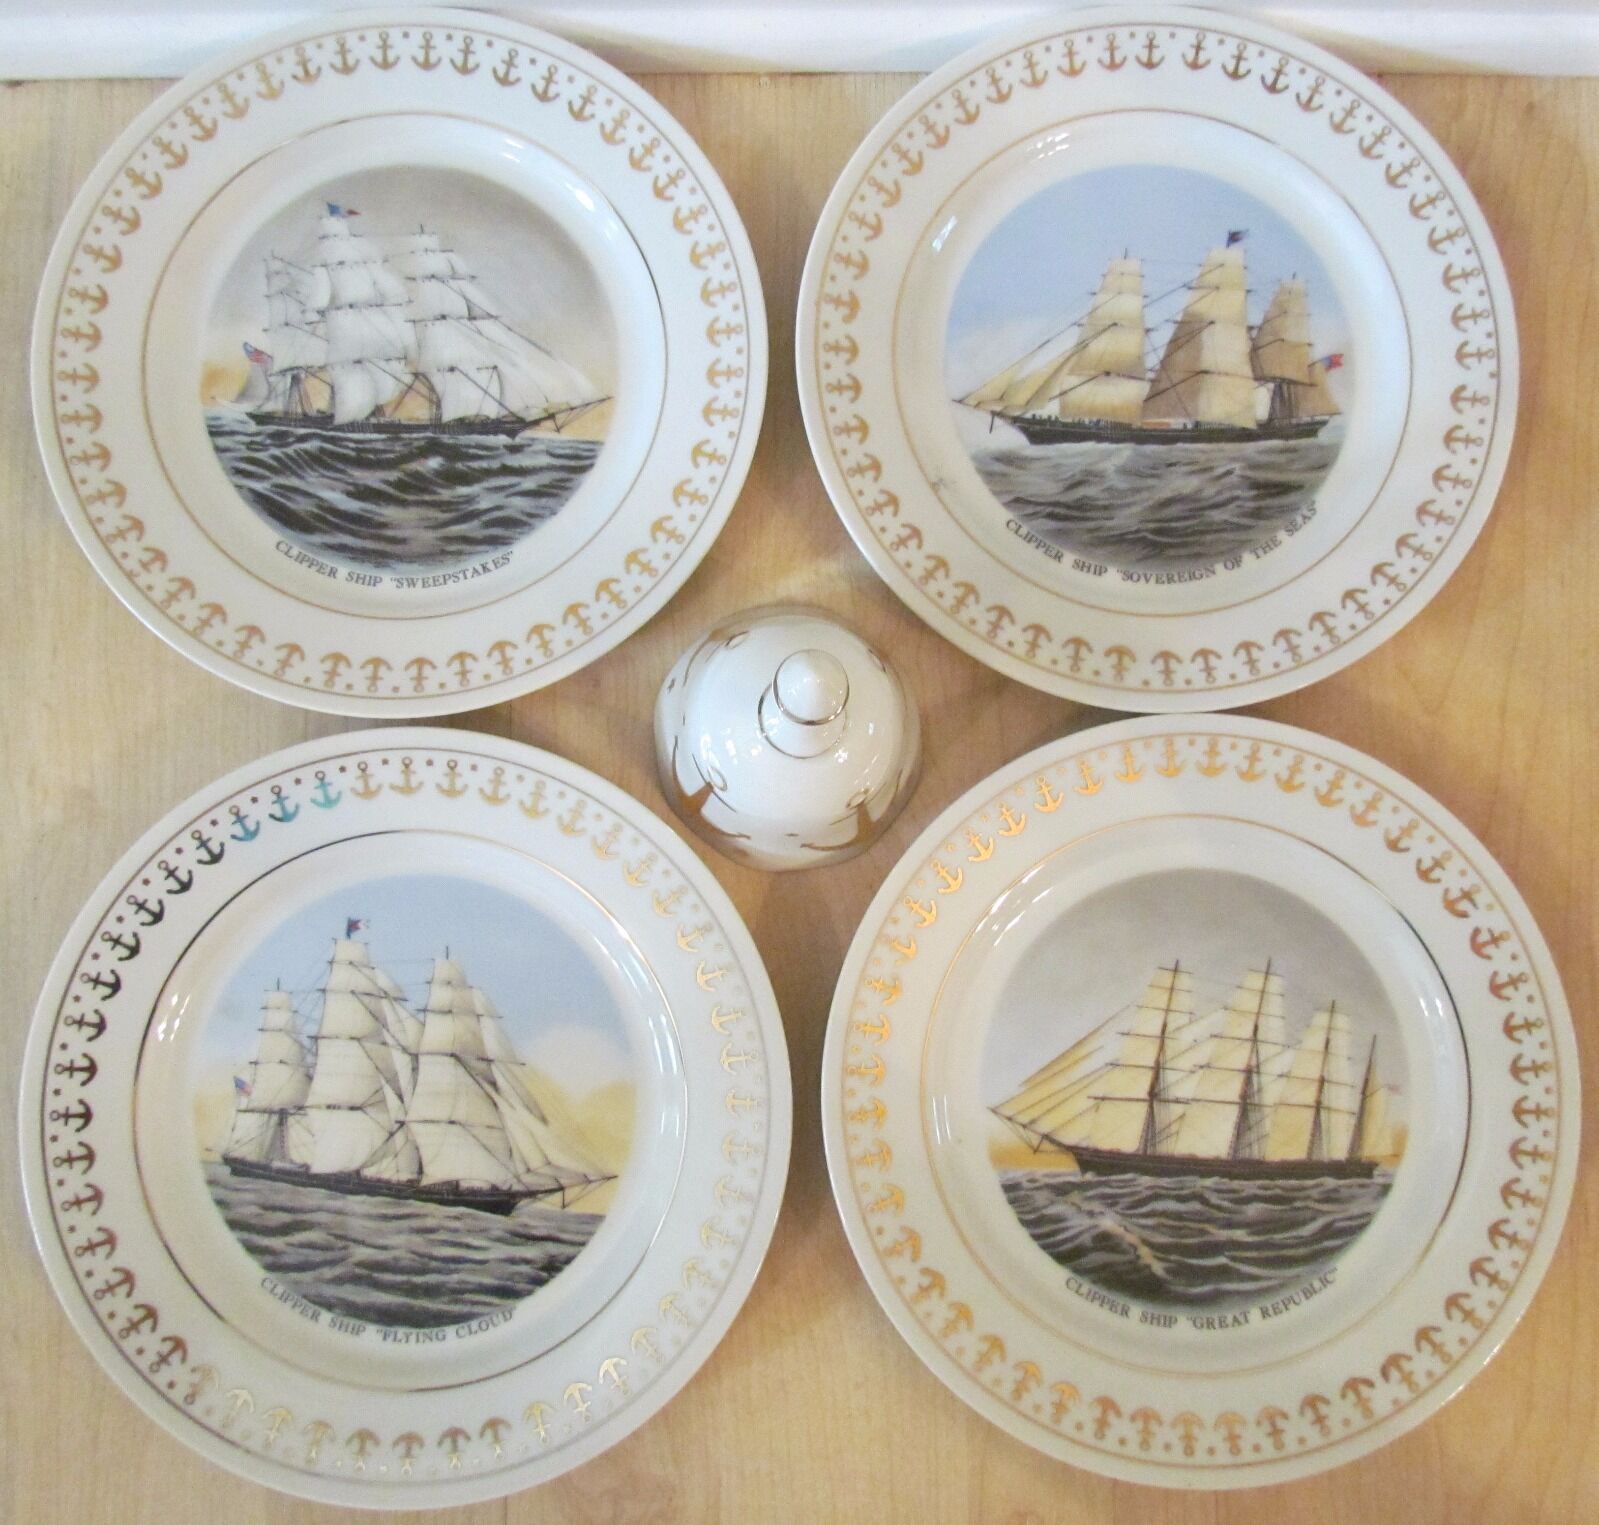 Sailing Ships Clipper Ship Royal Eaton 1982 4-Plates and Bell Collection